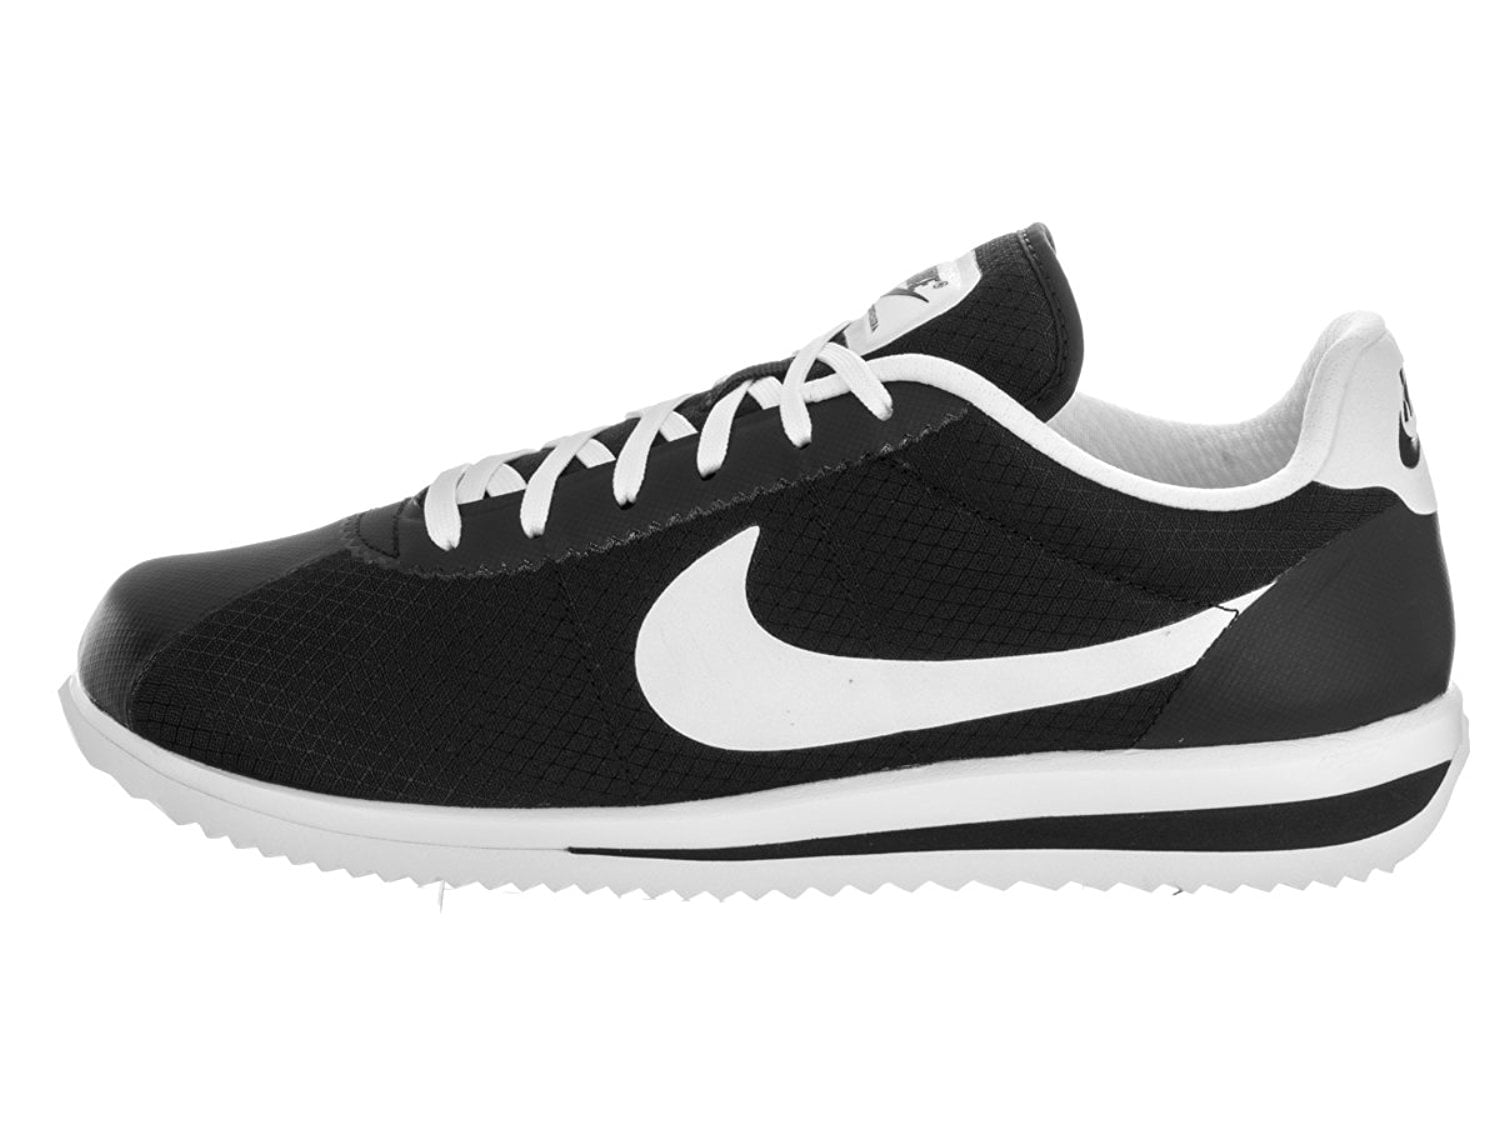 Nike 833142-002 : Men's Cortez Ultra Casual Shoe Black/White (Black, 12 - Walmart.com